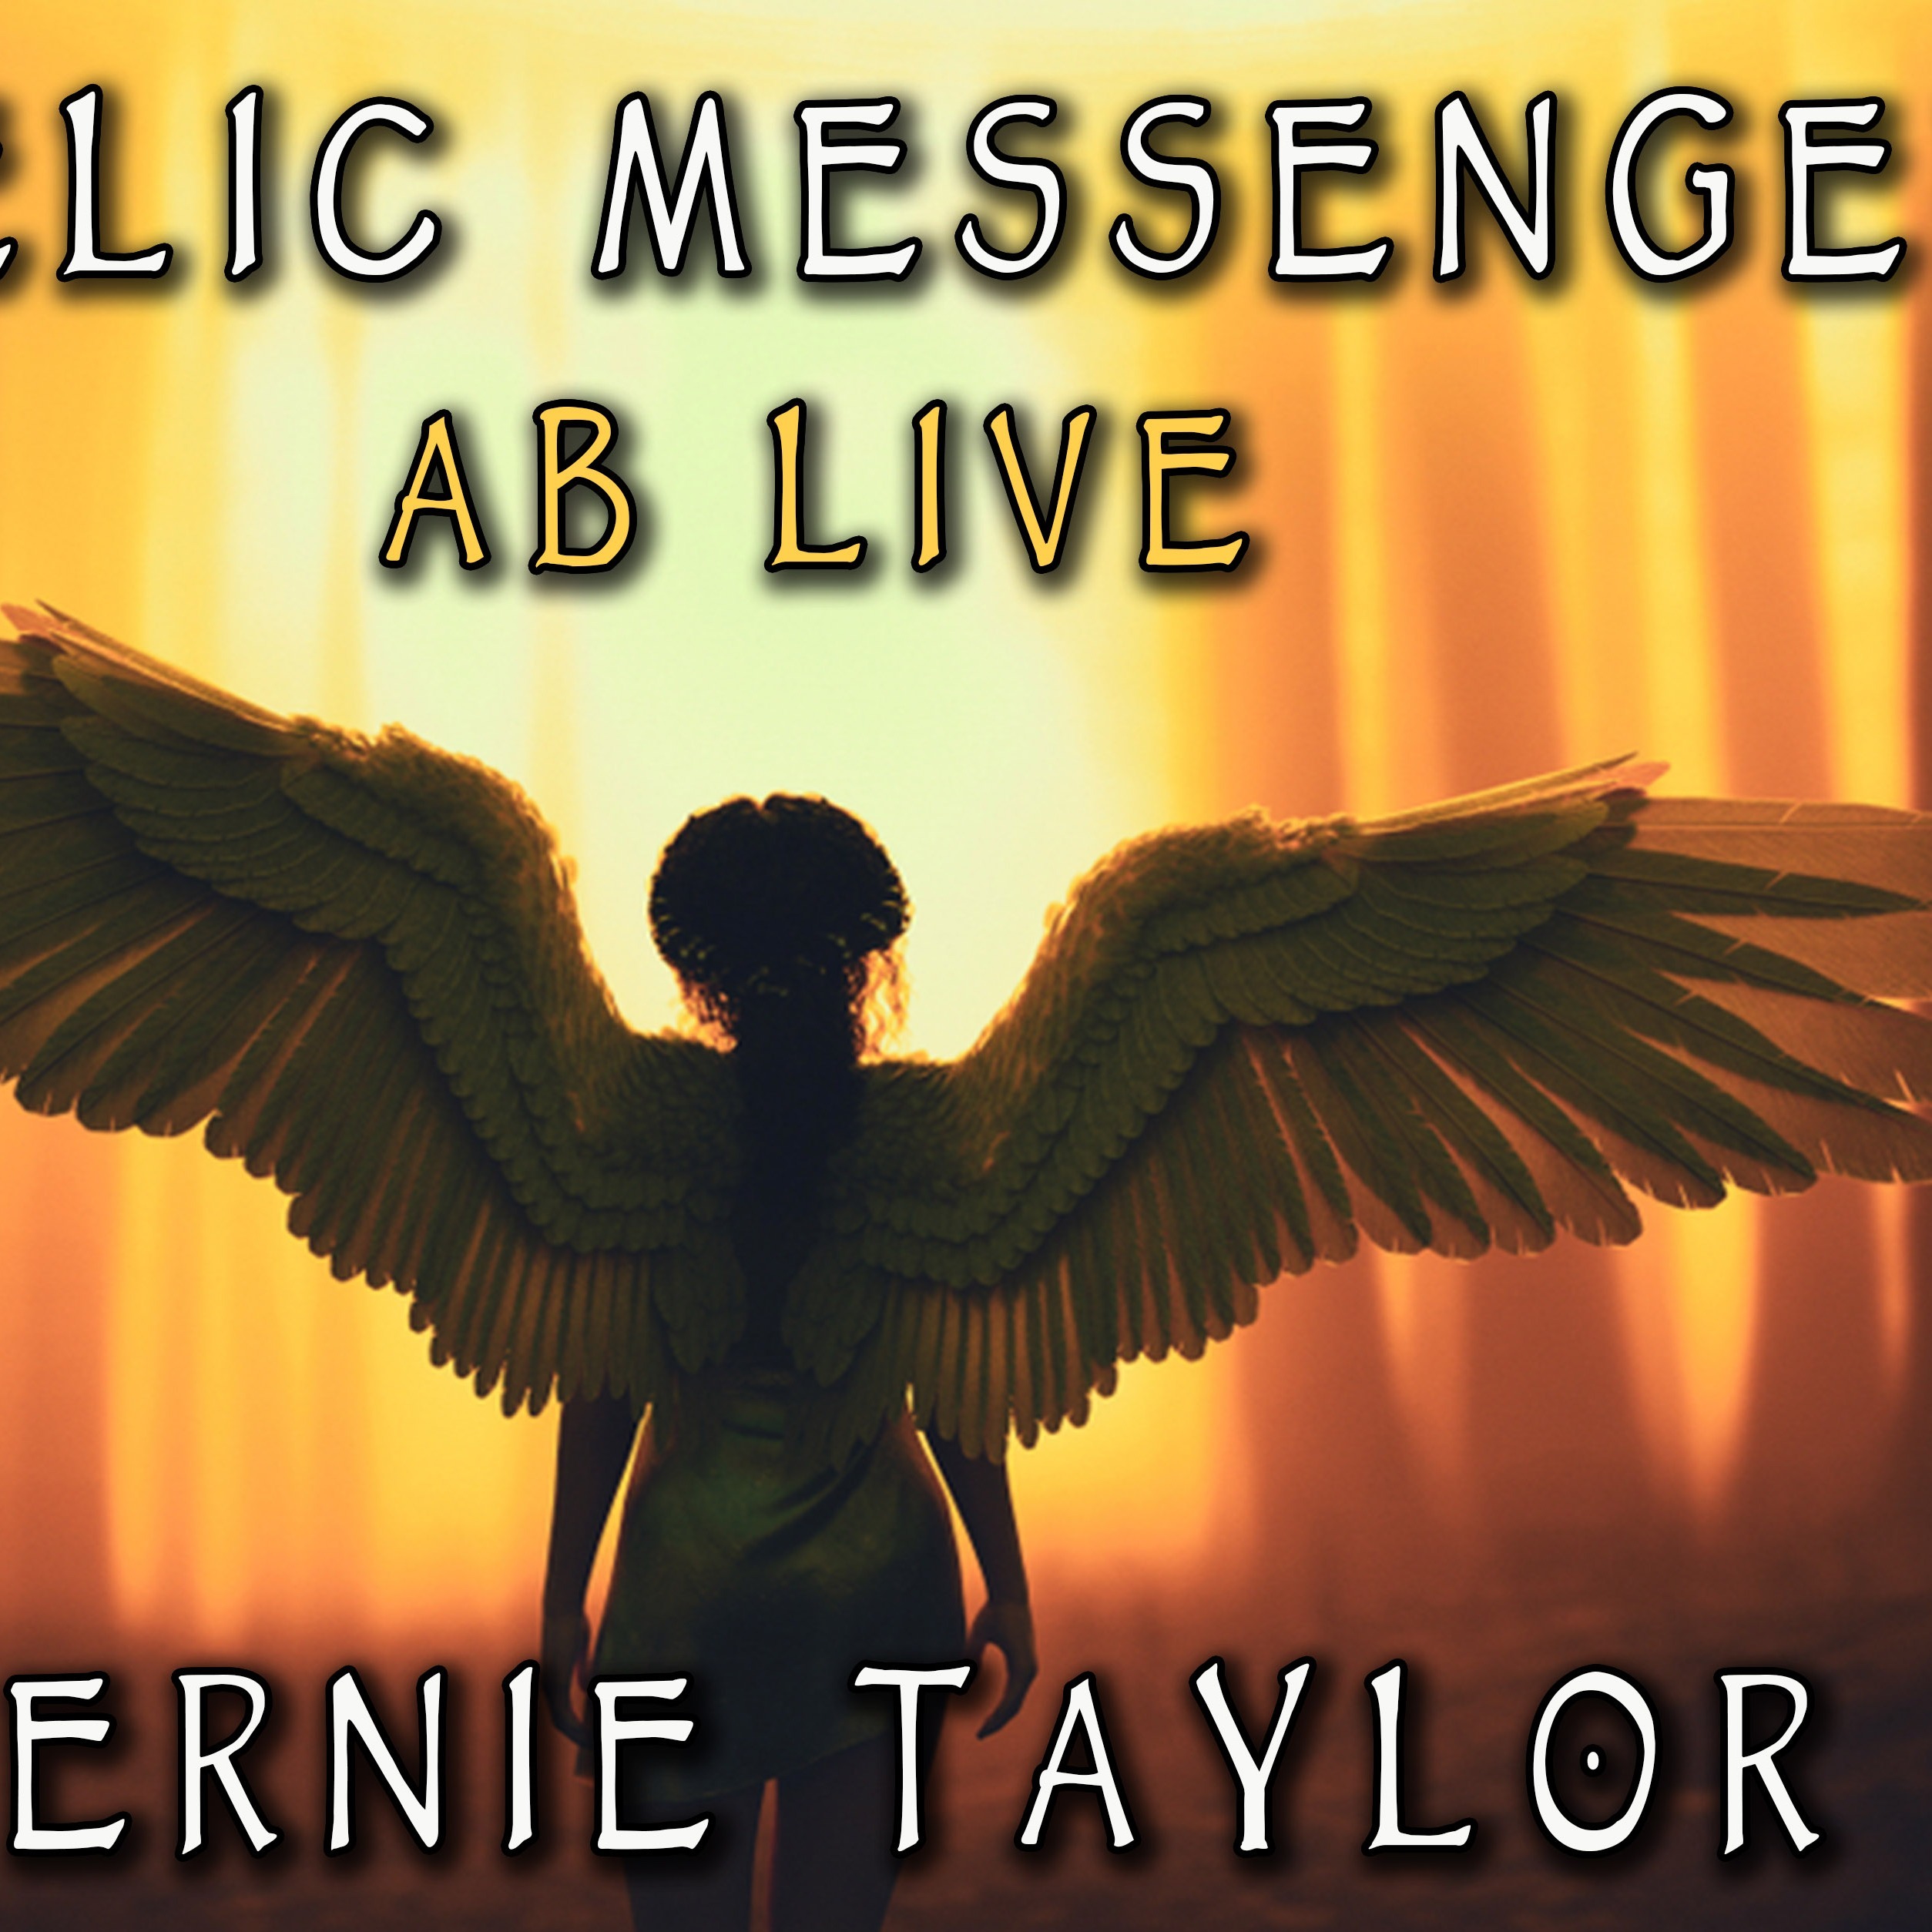 Bernie Taylor on Angelic Messengers